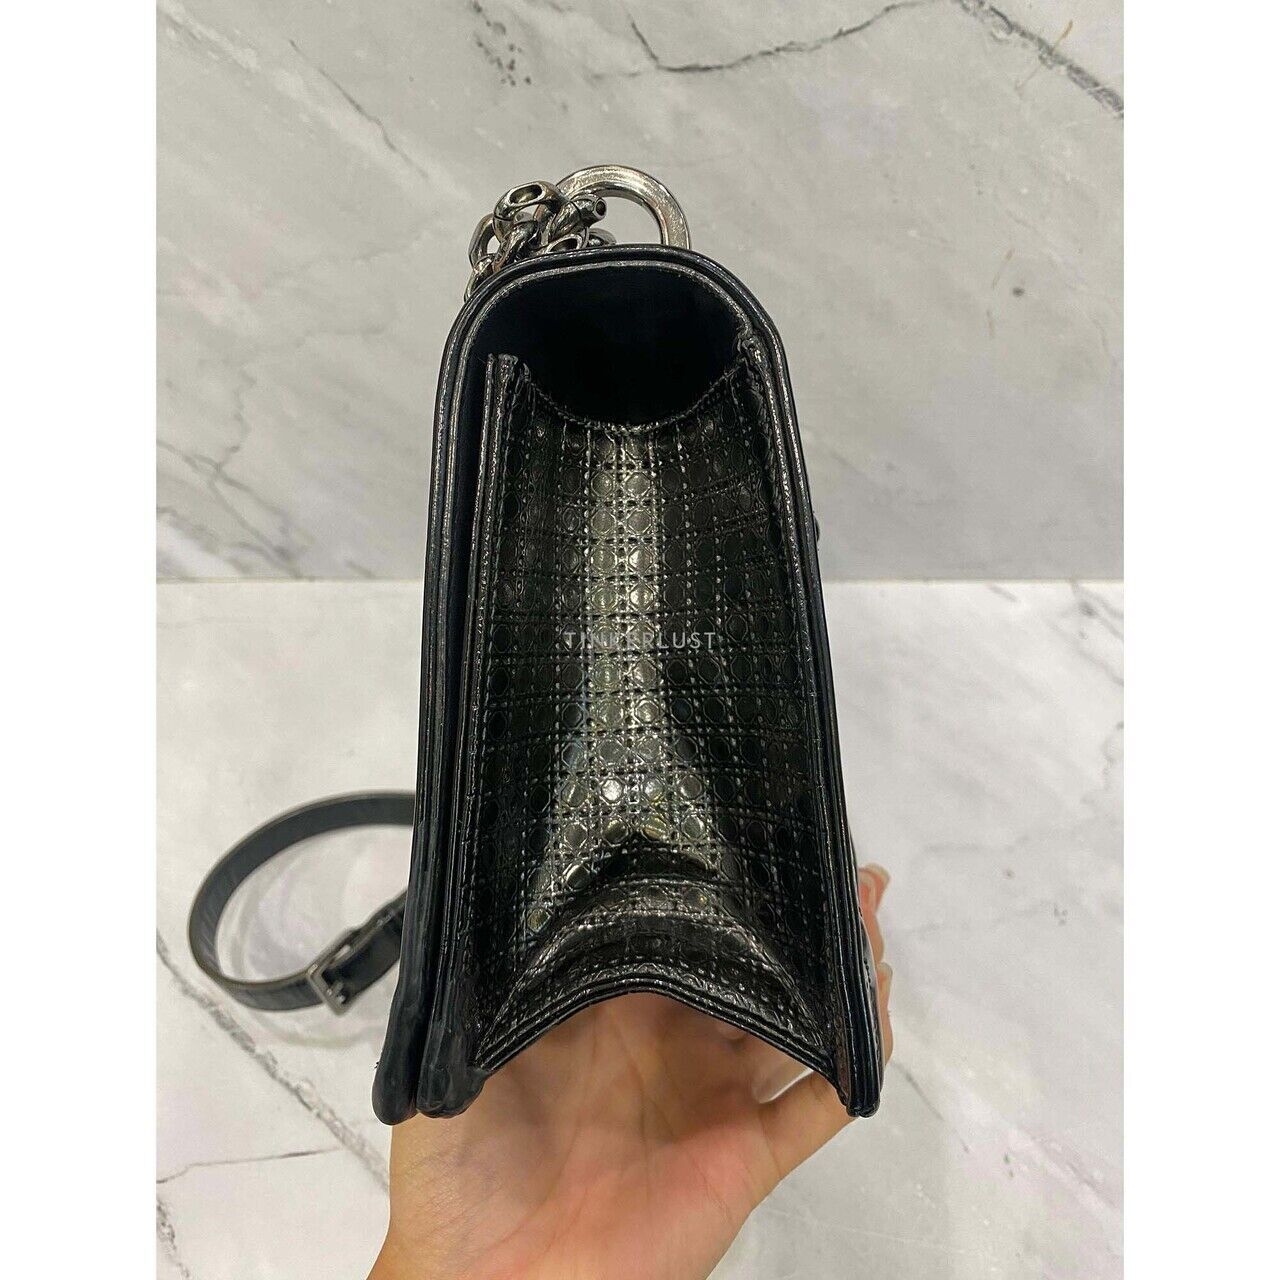 Christian Dior Diorama Medium Black Metalic SHW 2017 Shoulder Bag